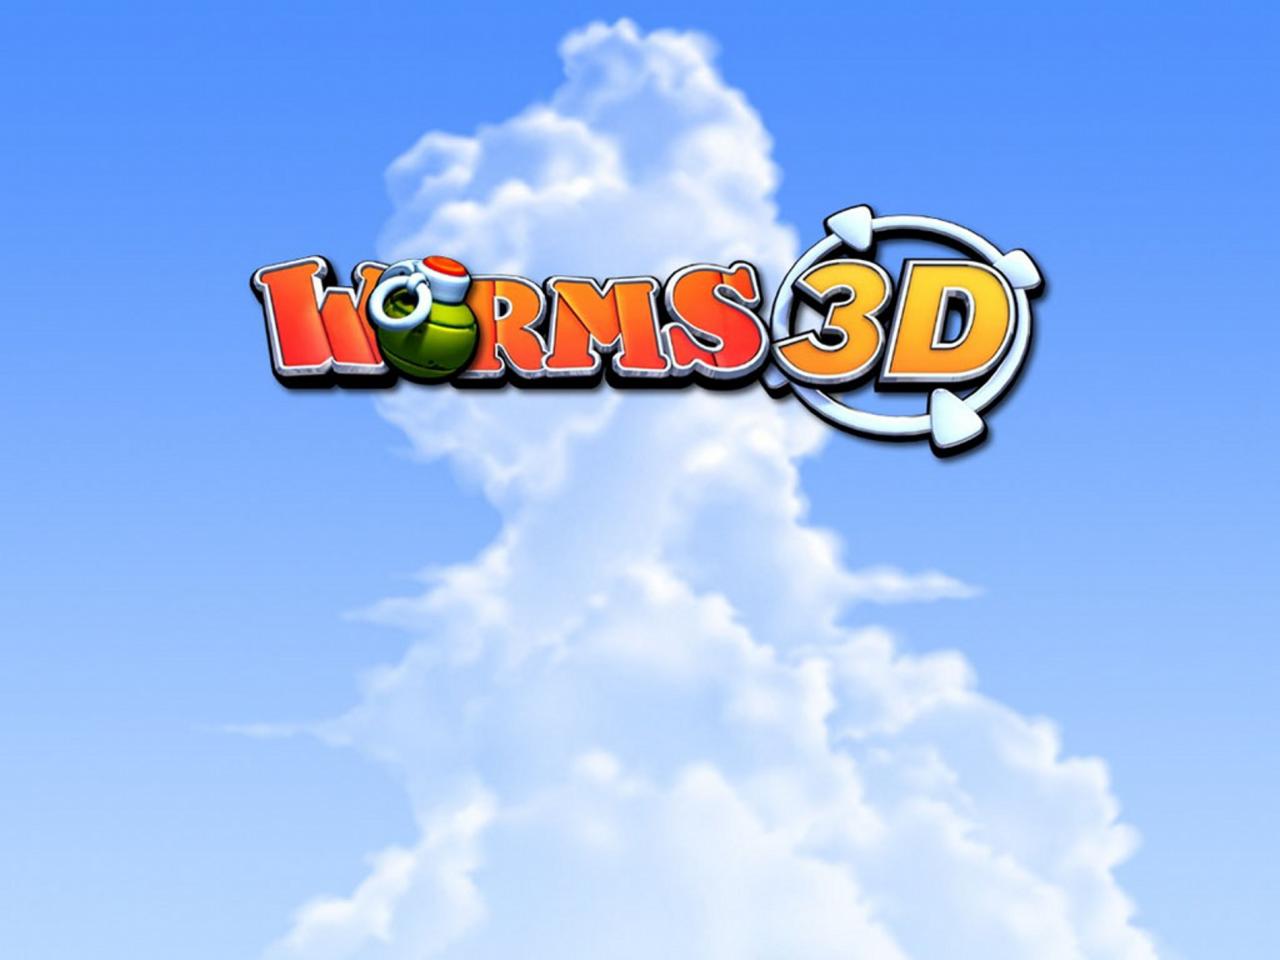 обои Worms 3D лого фото